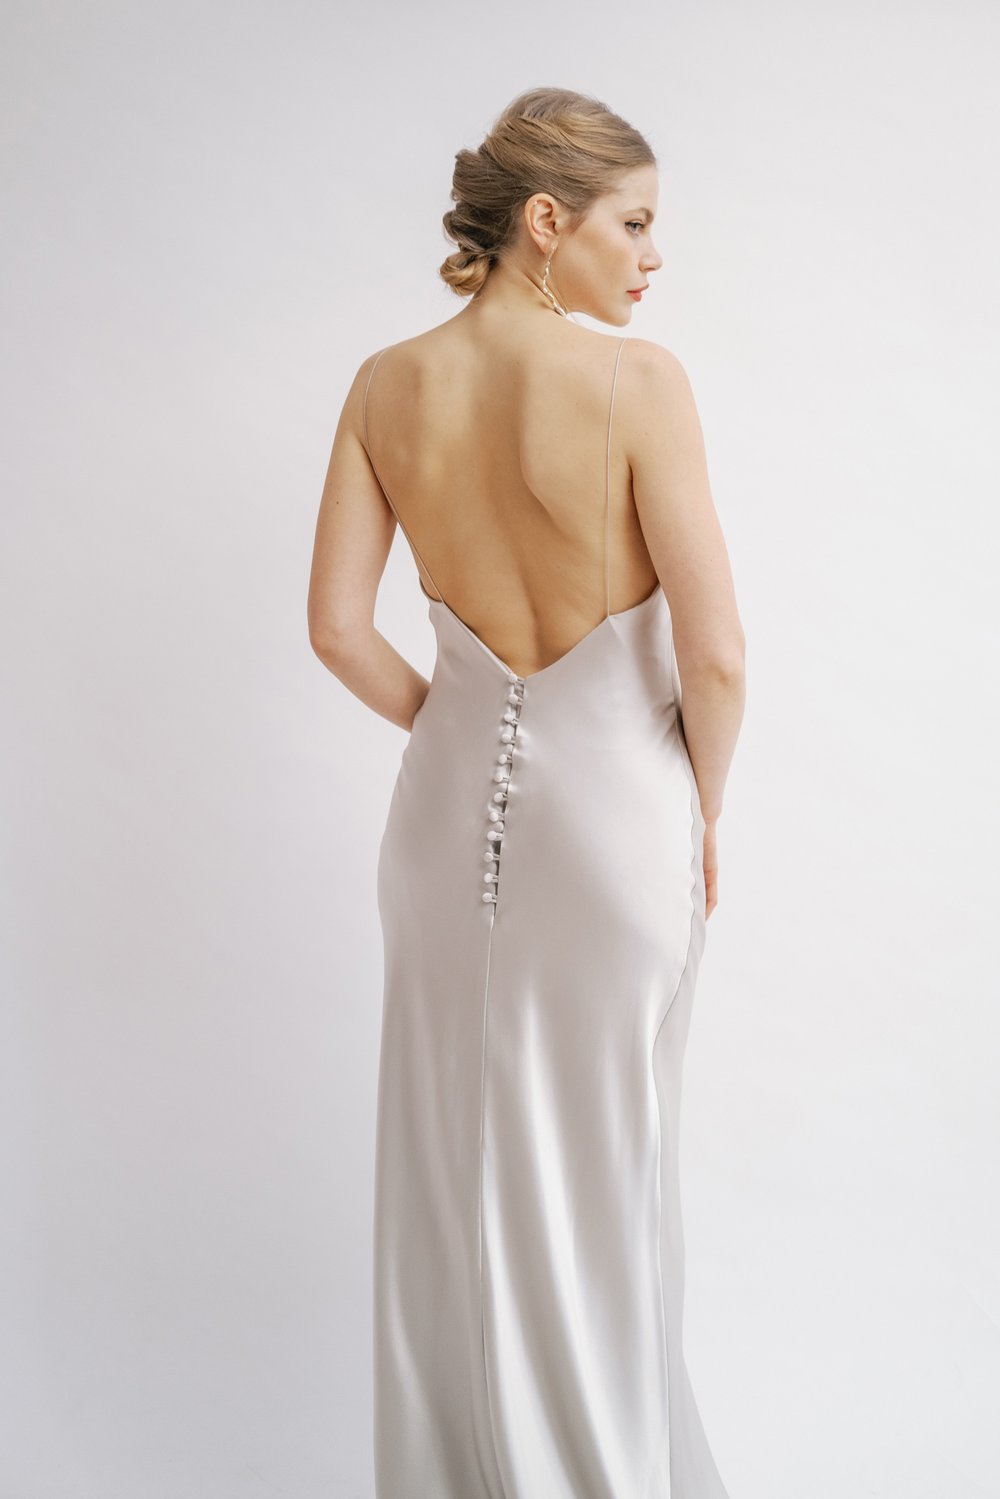 Cosmos silver slip dress silk wedding gown Kate Beaumont Sheffield 3.jpg